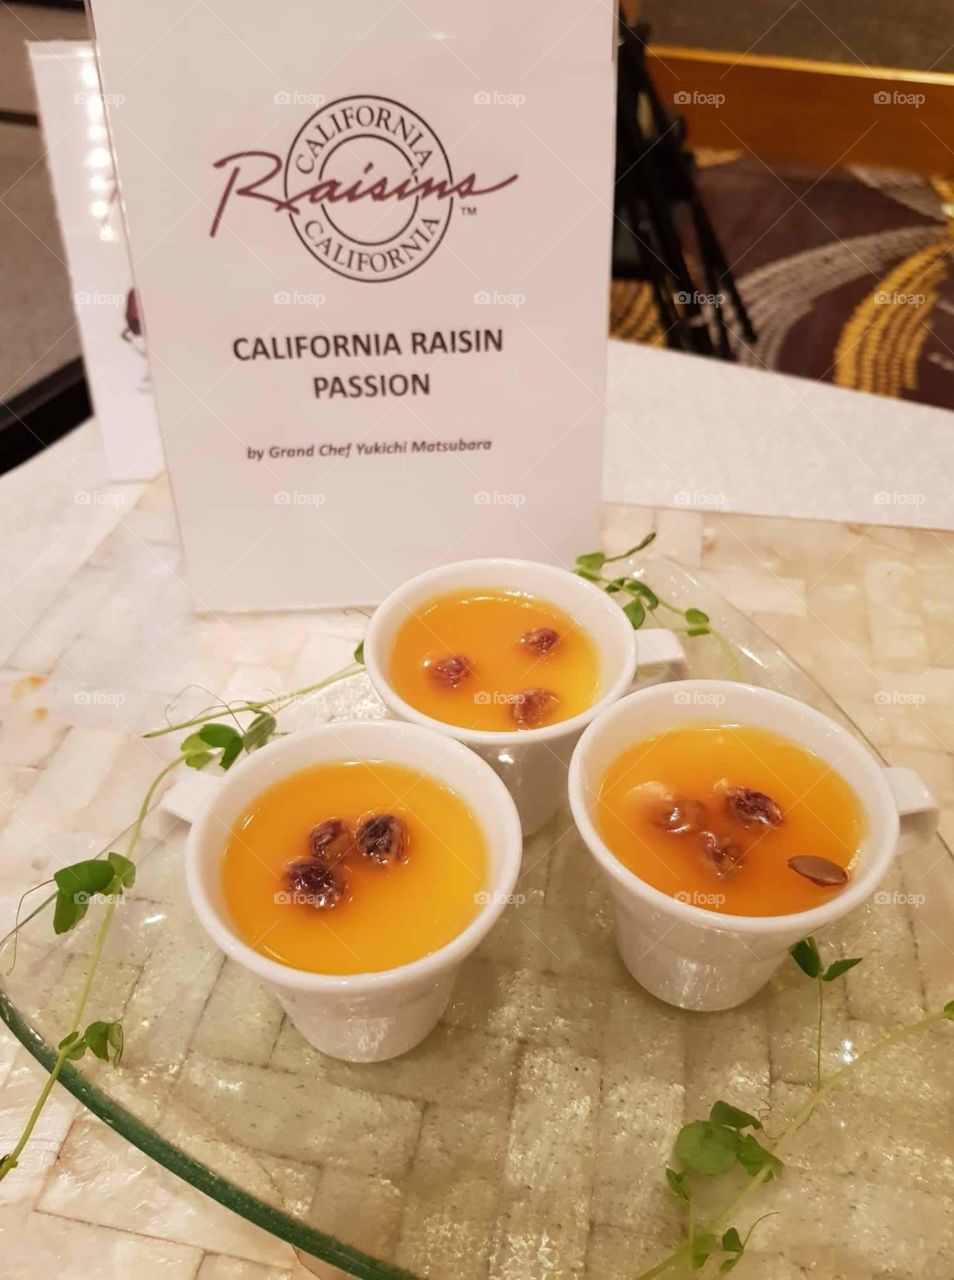 An amazing and tasteful california raisin served in a mug.